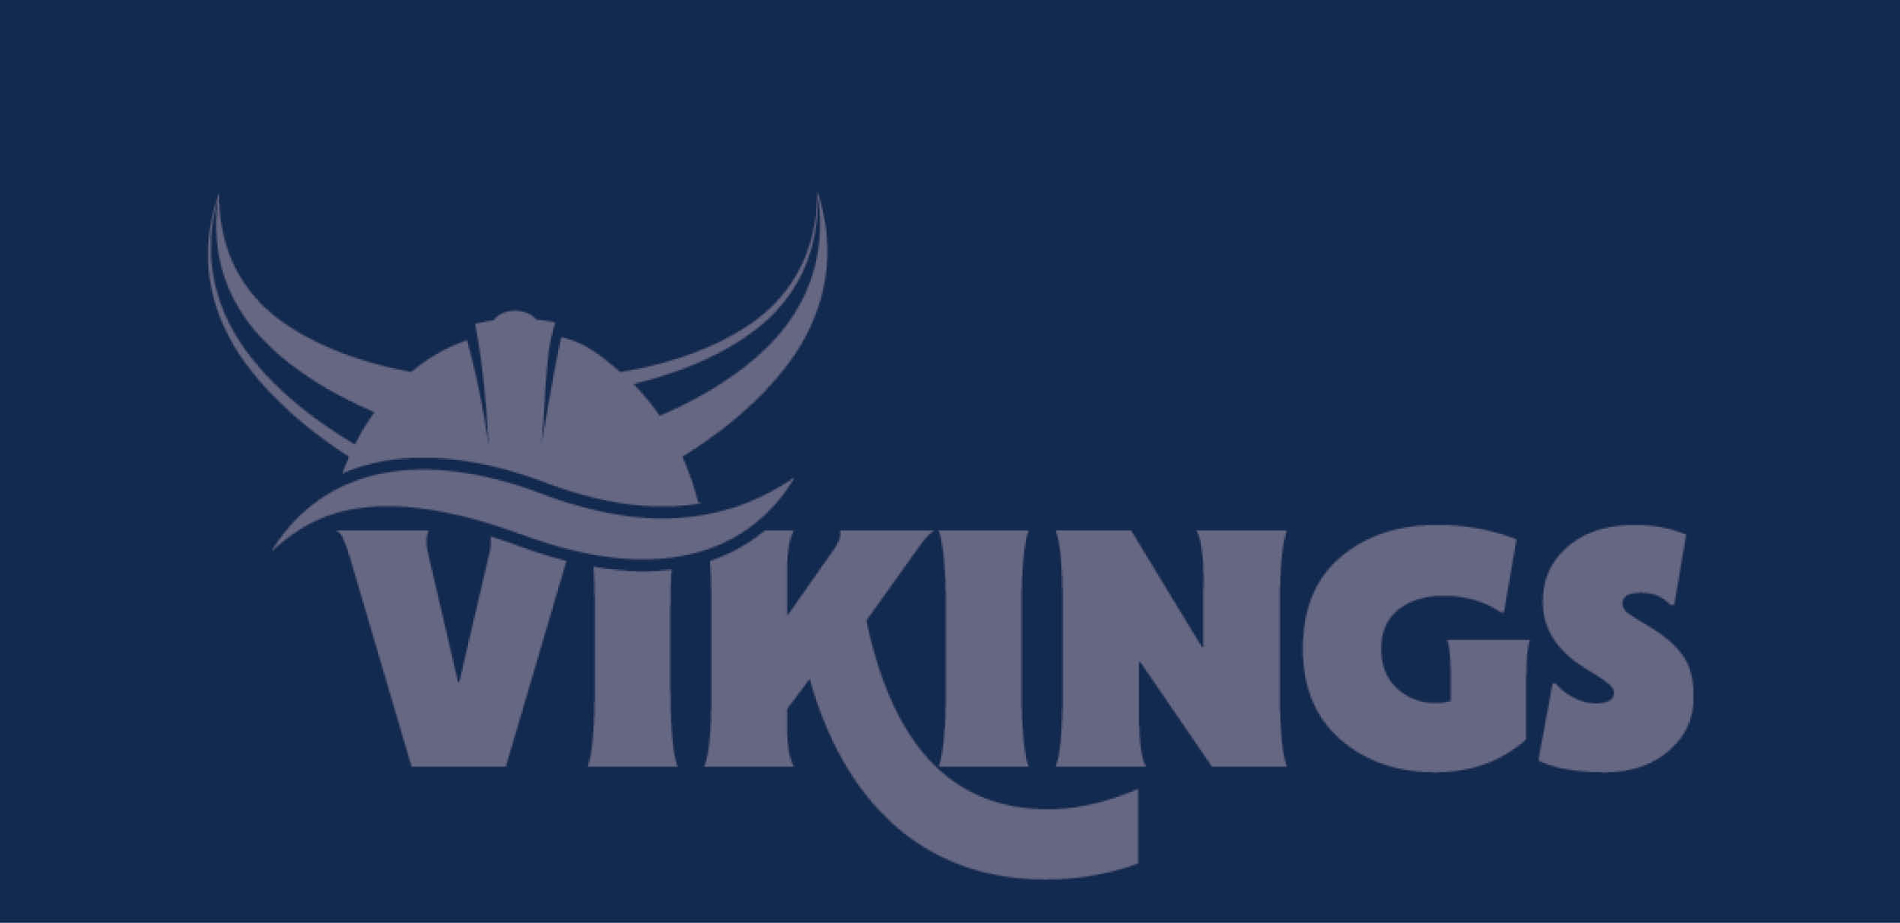 New Viking spirit symbol